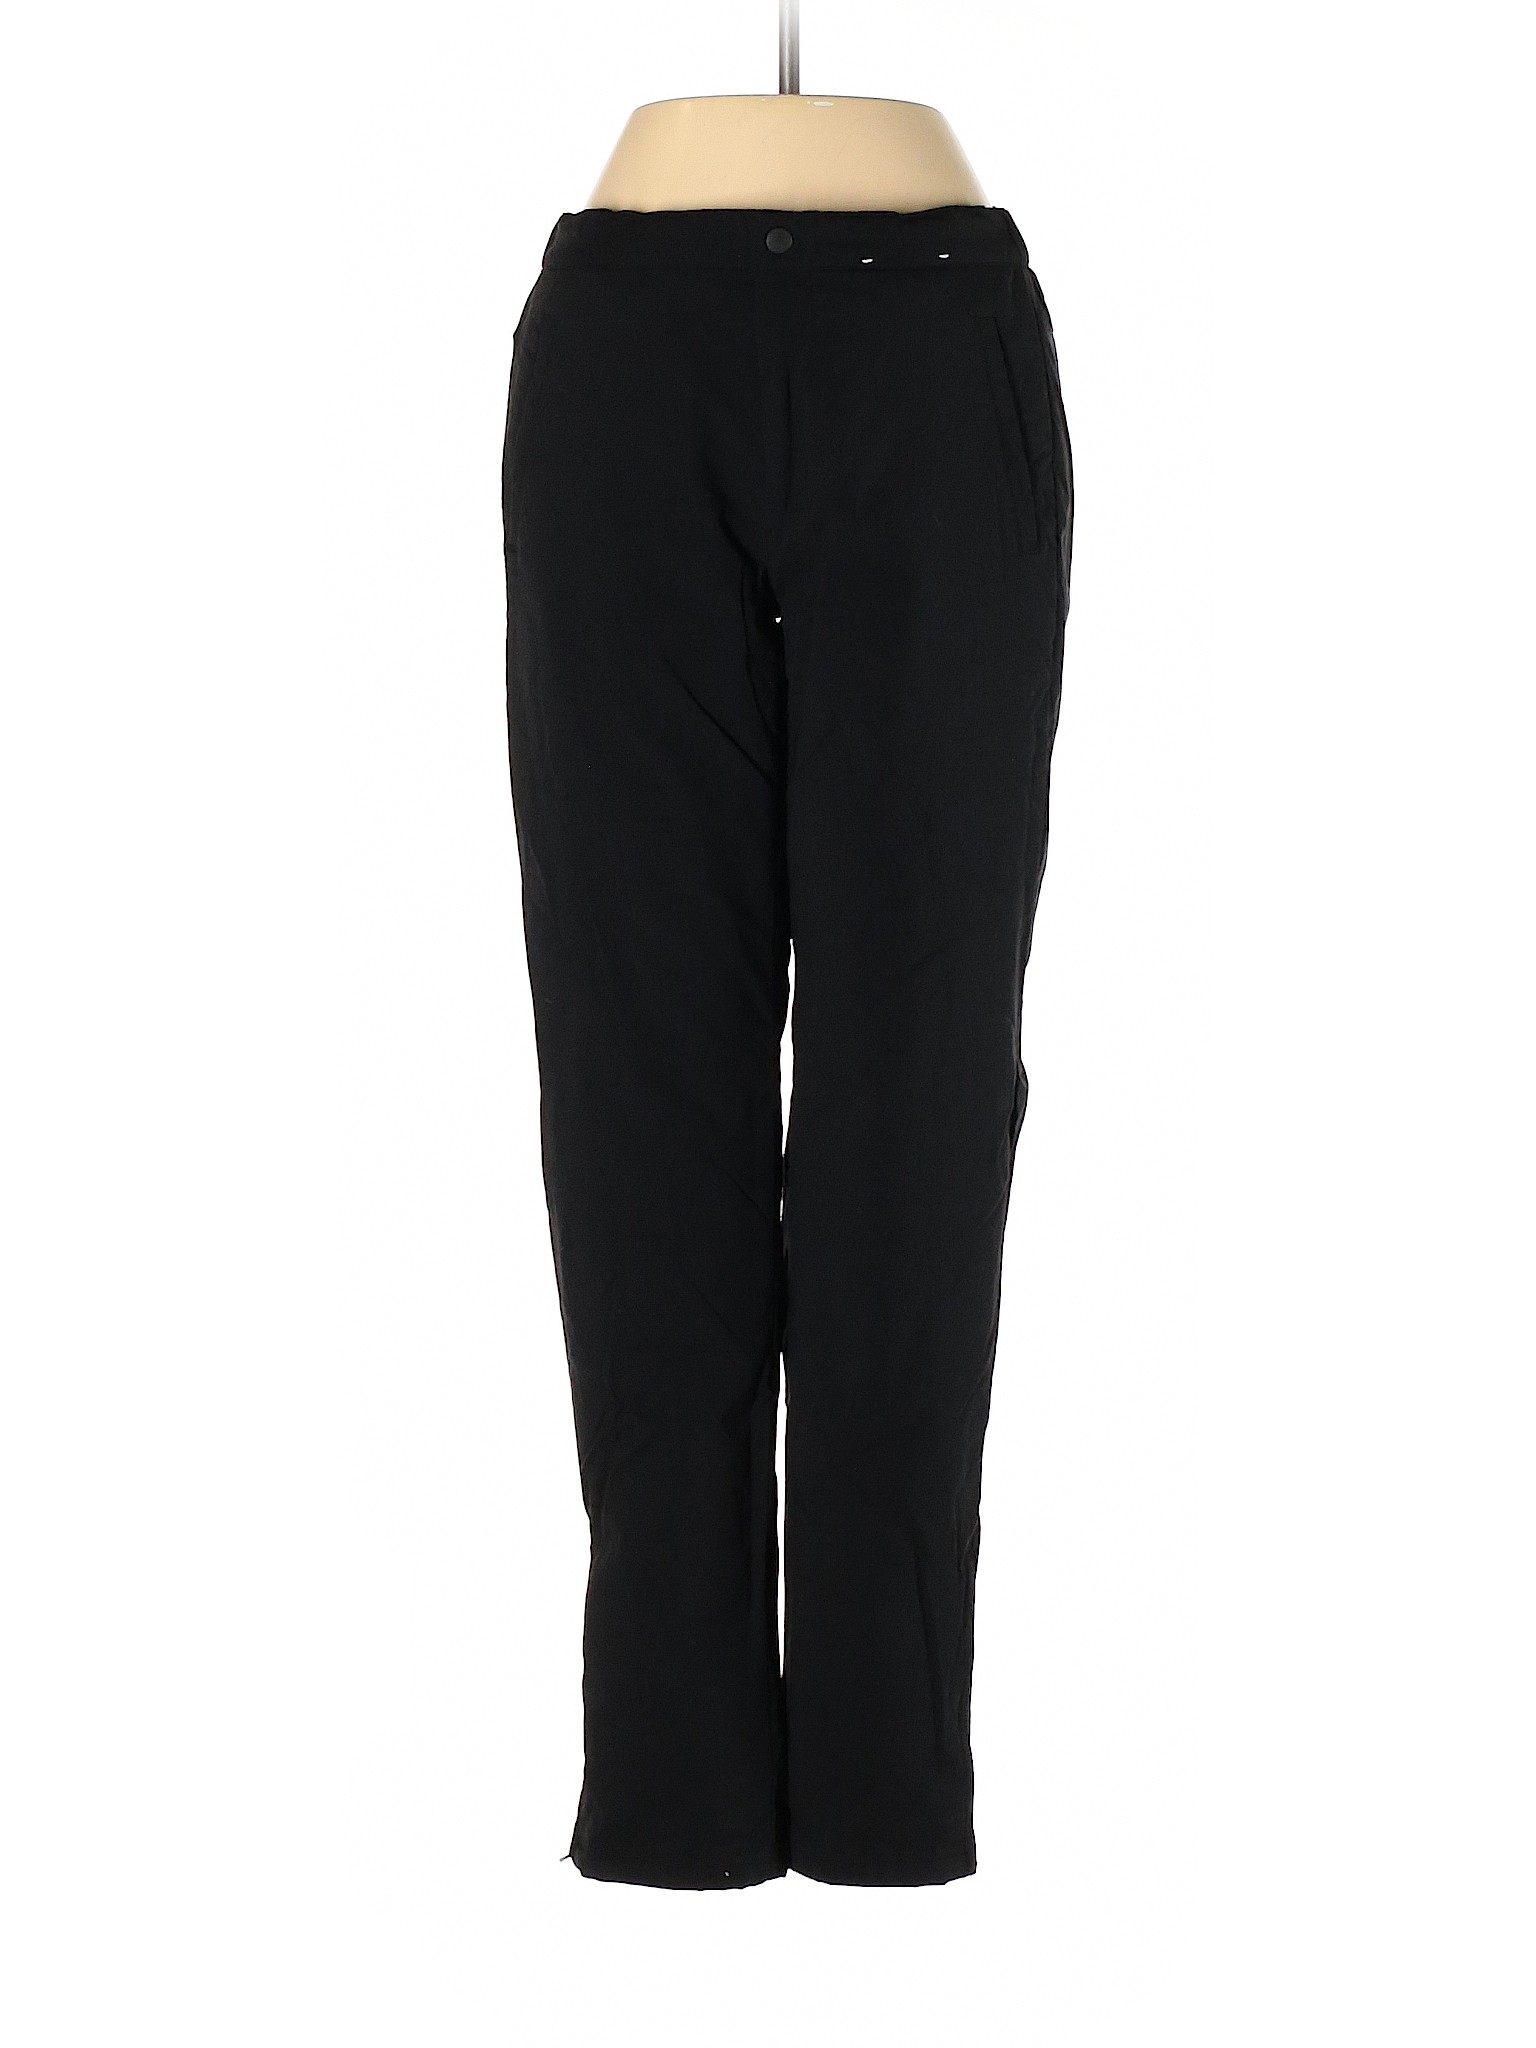 Uniqlo Women Black Snow Pants XS | eBay